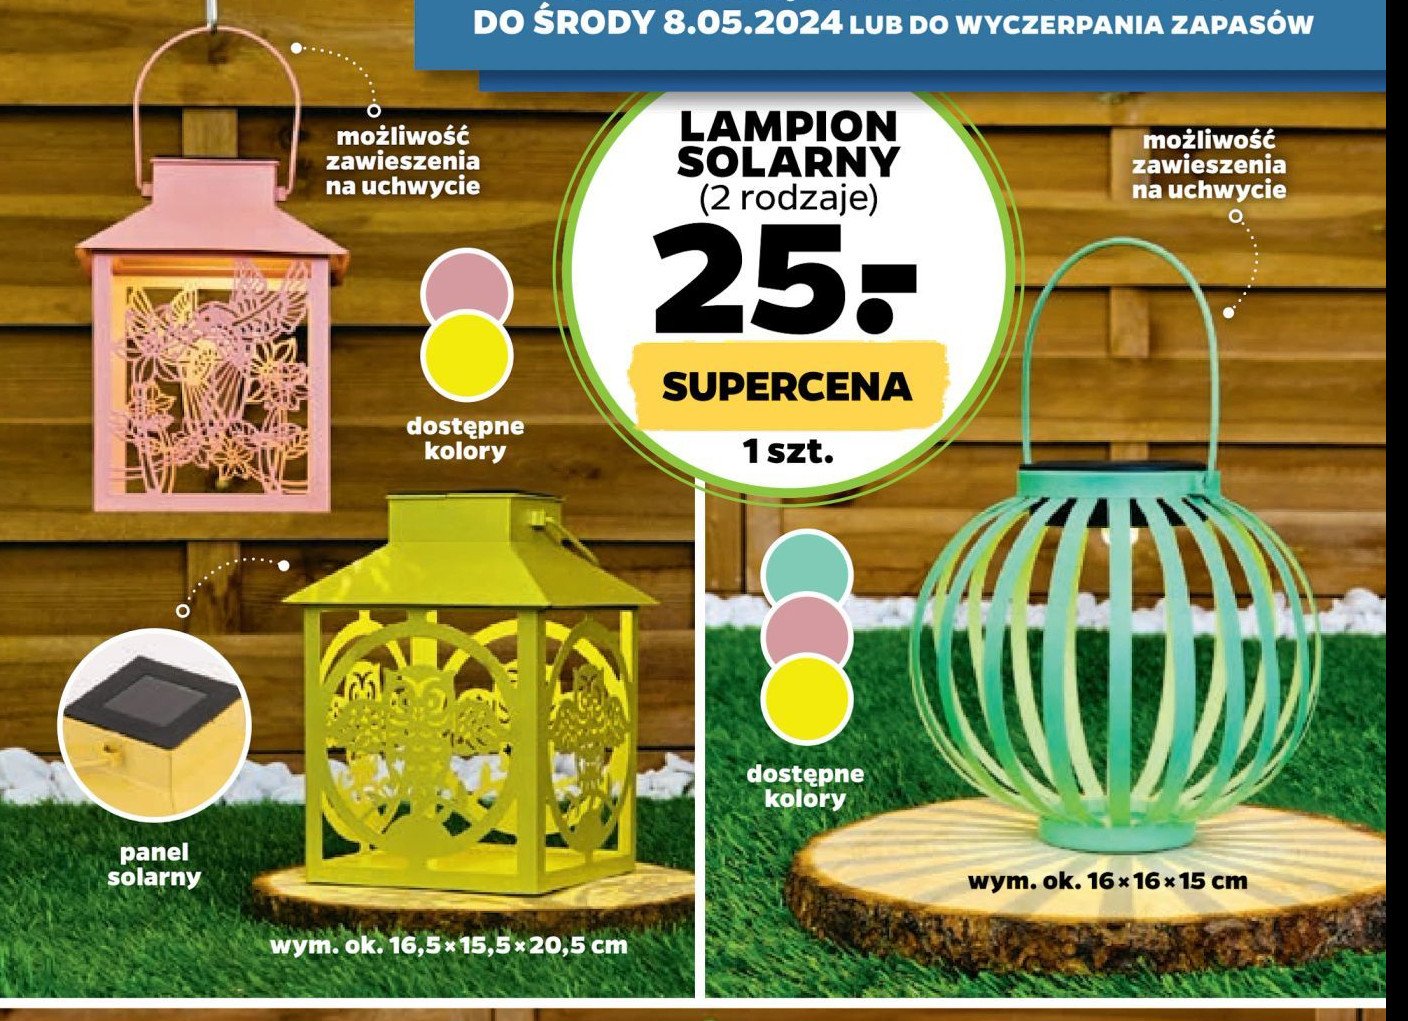 Lampion solarny 16 x 16 x 15 cm promocja